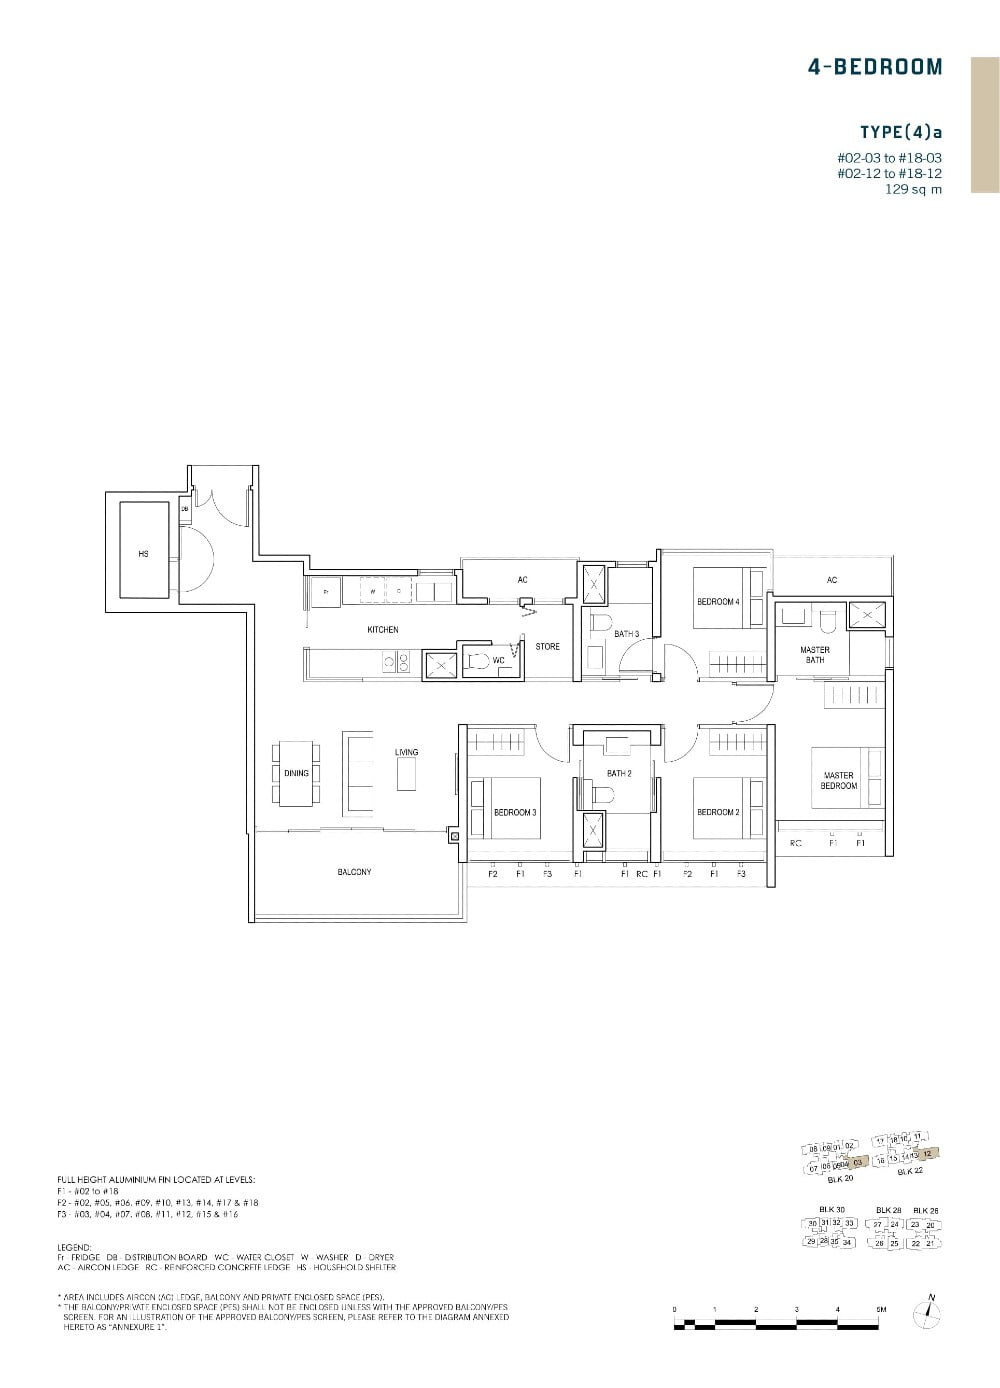 fp-penrose-4a-floor-plan.jpg